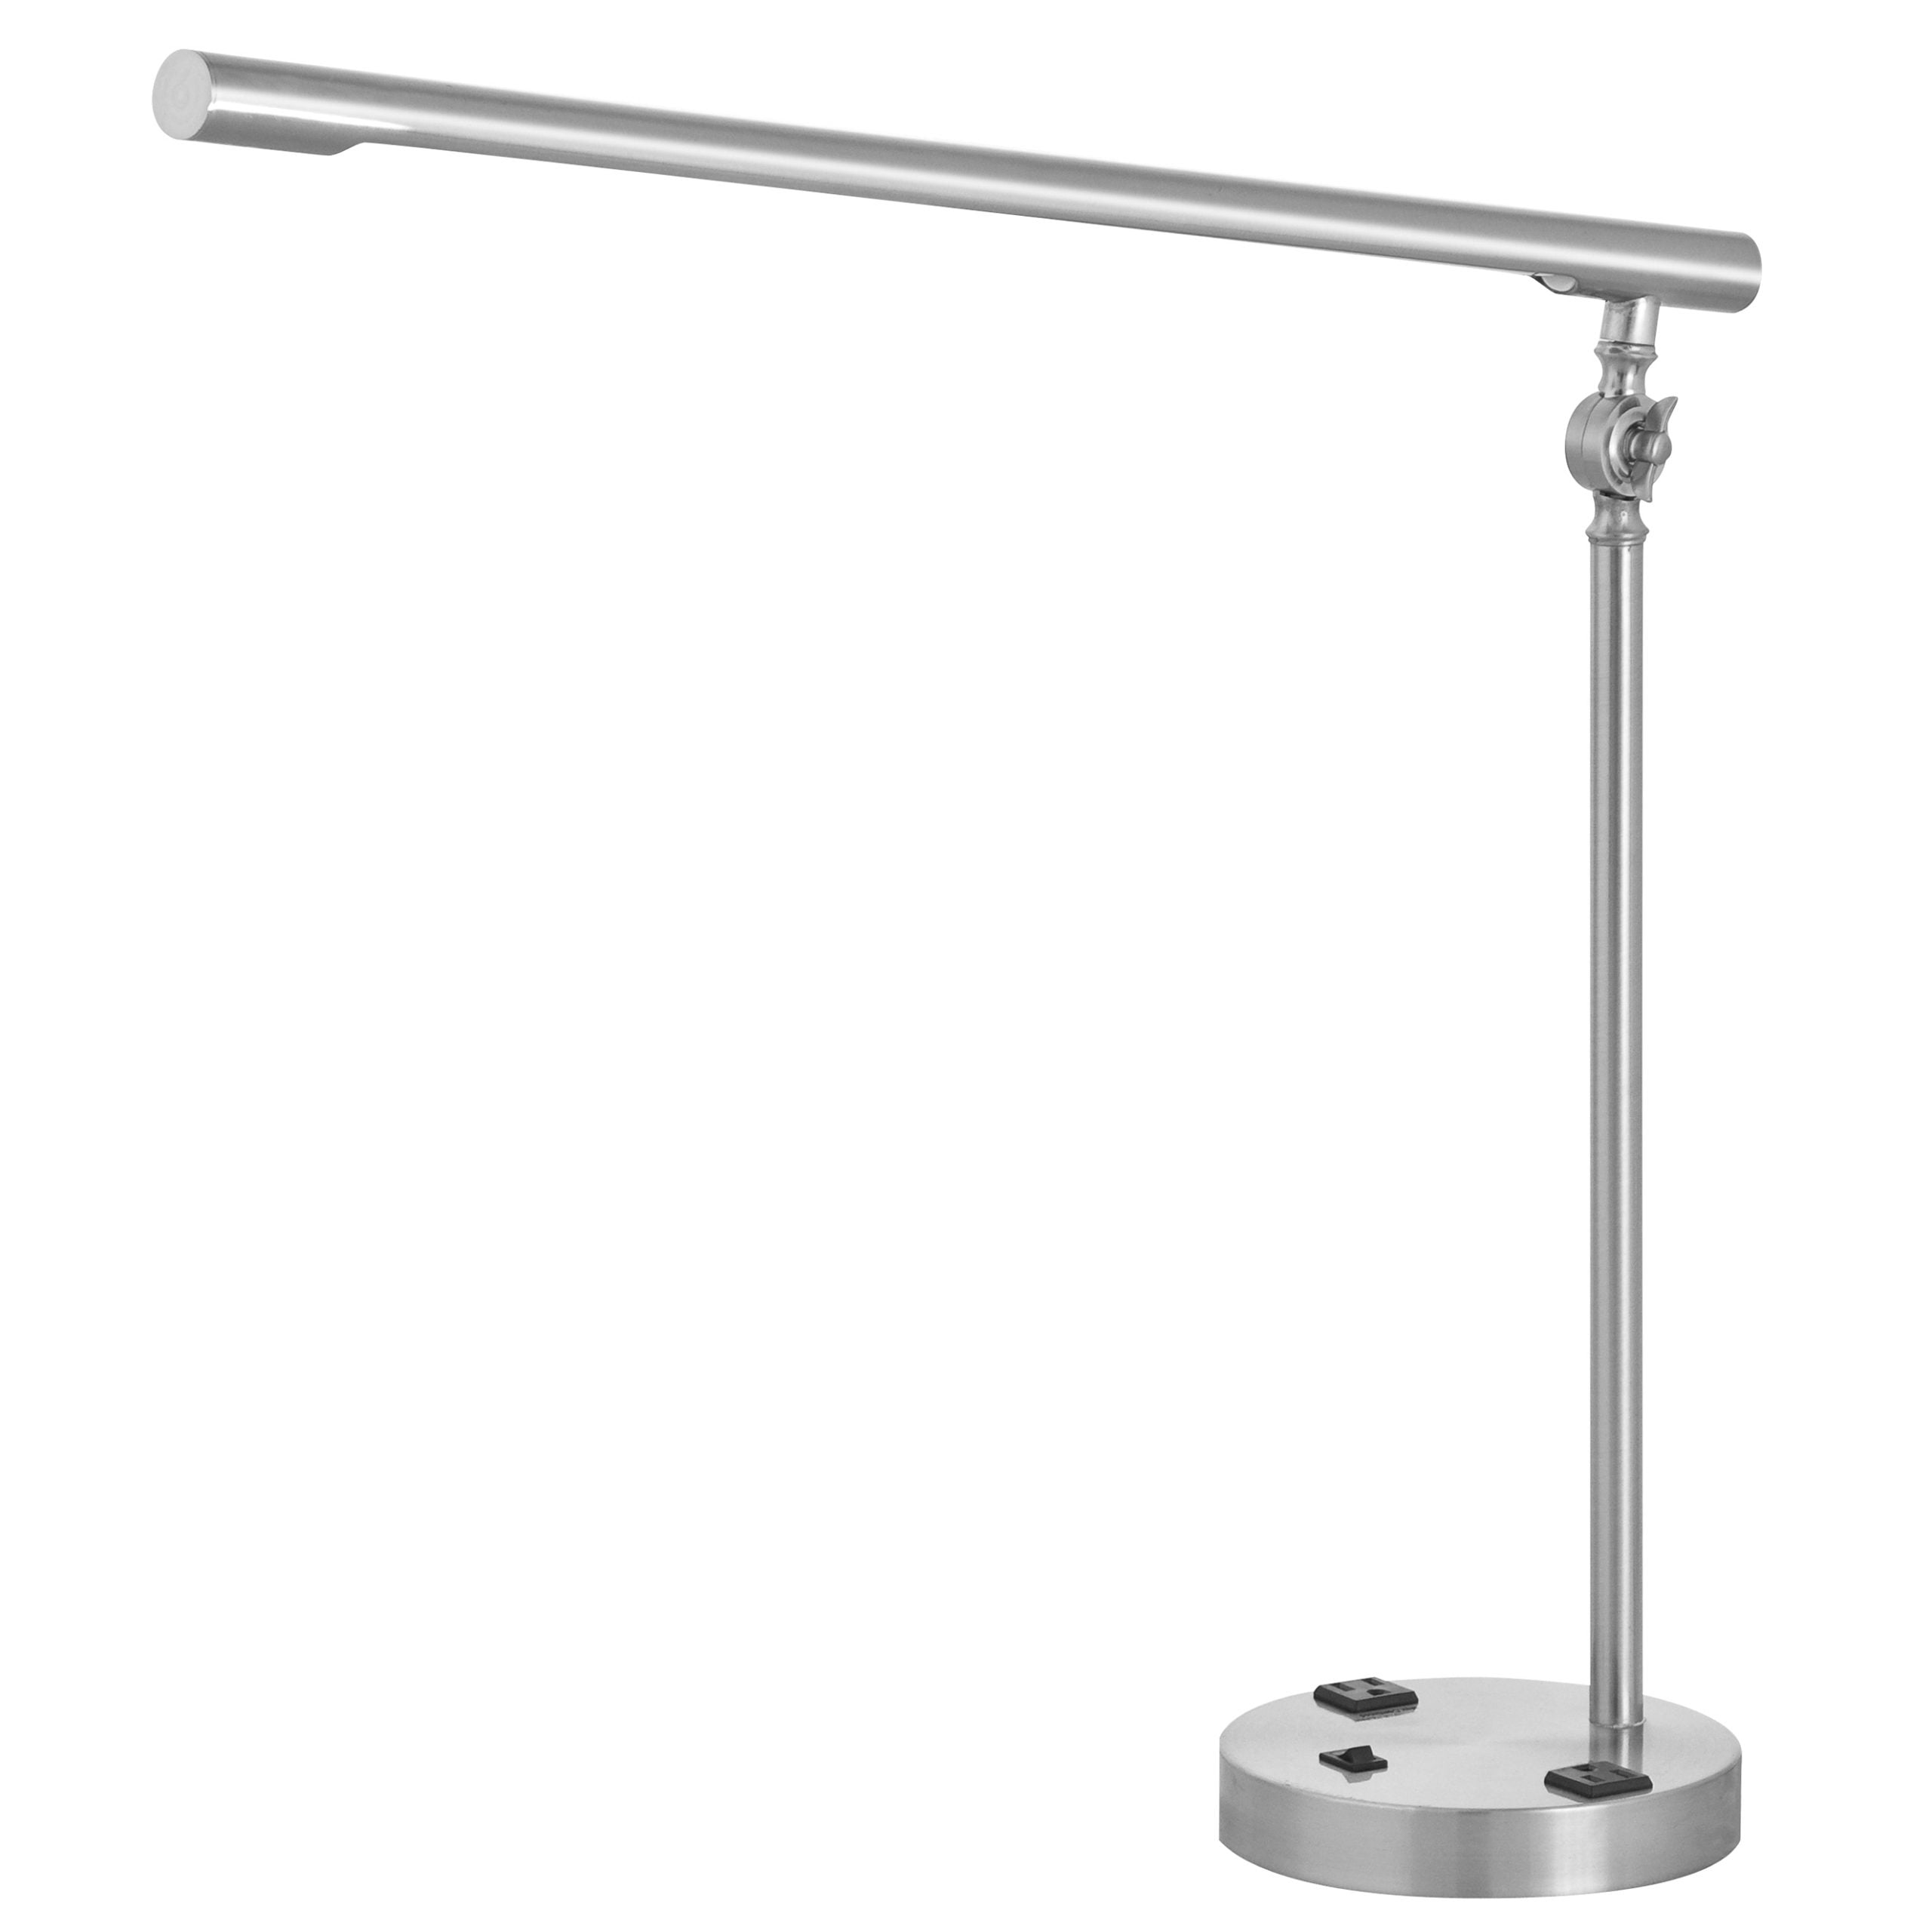 Prestige Desk Lamp with 2 Outlets